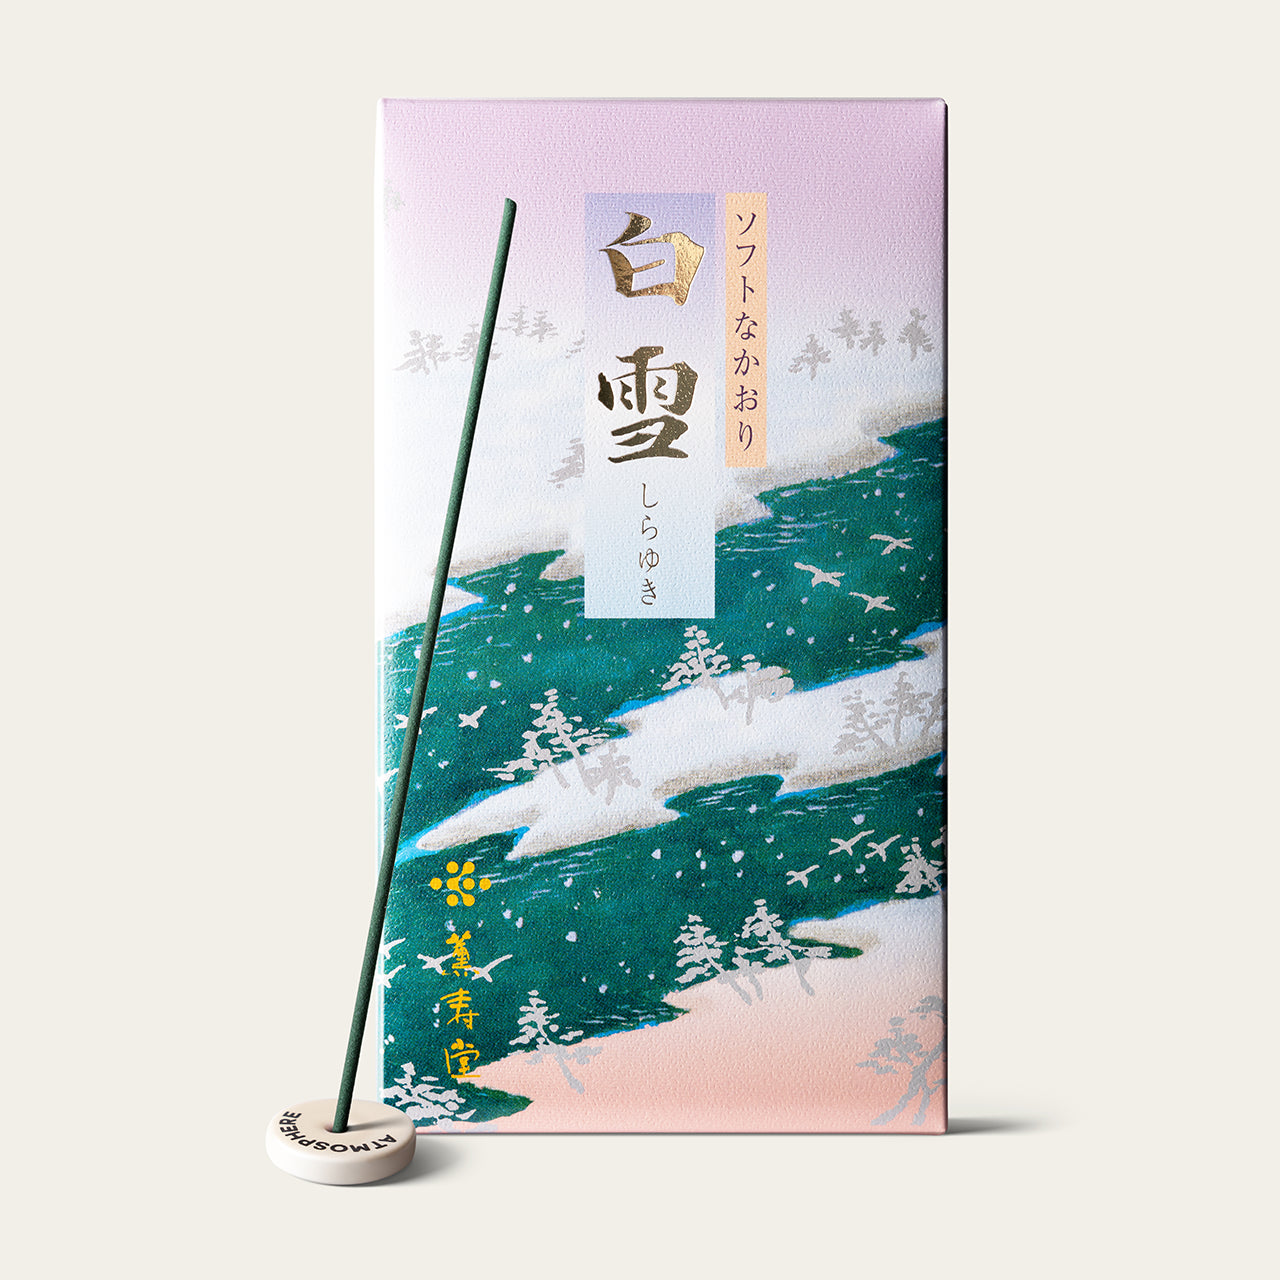 Kunjudo White Snow Shirayuki Japanese incense sticks (220 sticks) with Atmosphere ceramic incense holder